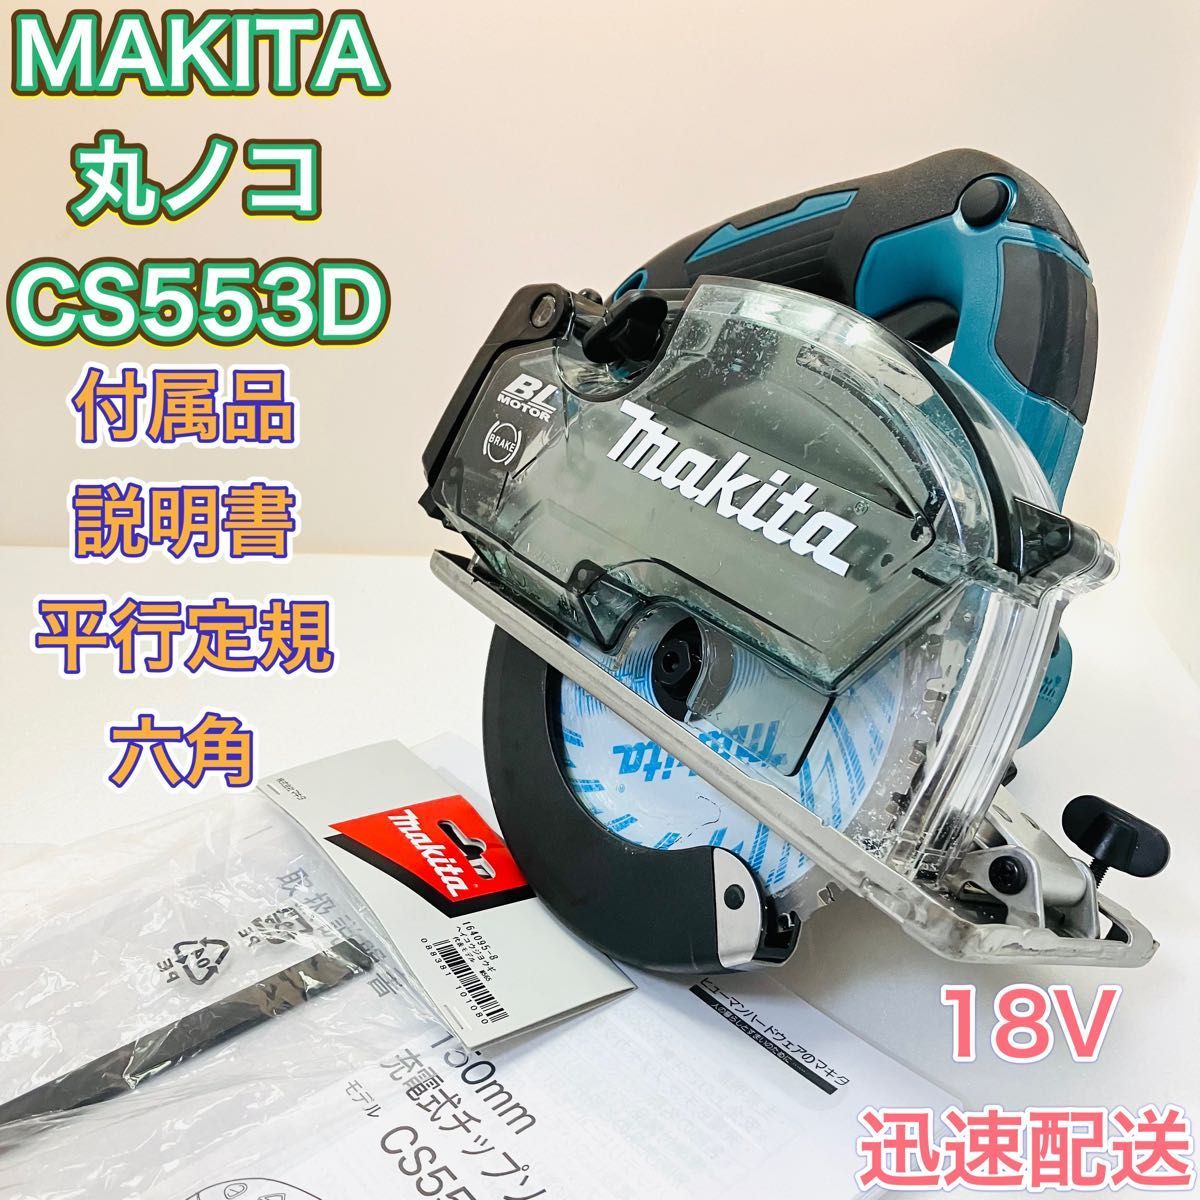 MAKITA マキタ CS553D 充電式 マルノコ チップソーカッター 丸鋸-